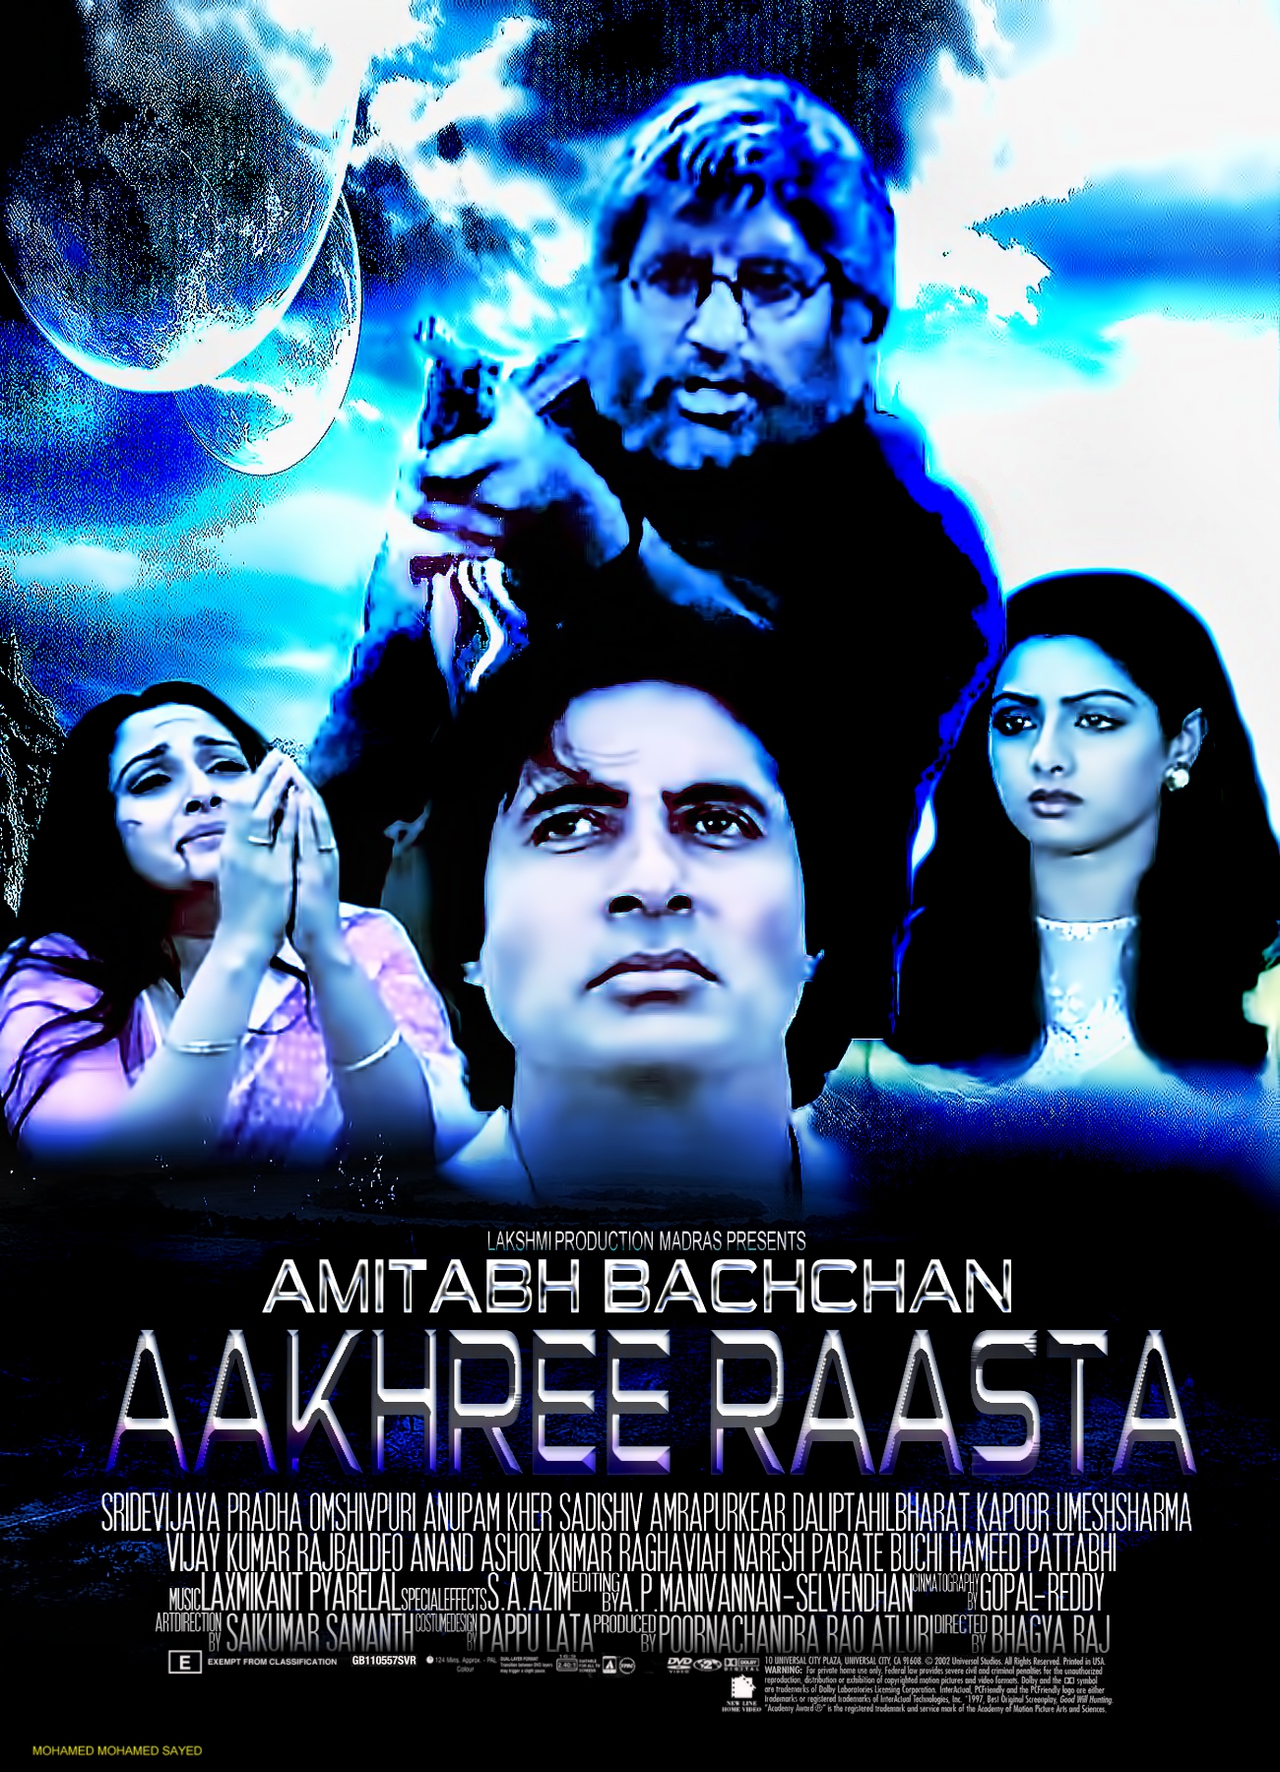 Jaya Prada در صحنه فیلم سینمایی Aakhree Raasta به همراه سری دوی و آمیتاب باچان